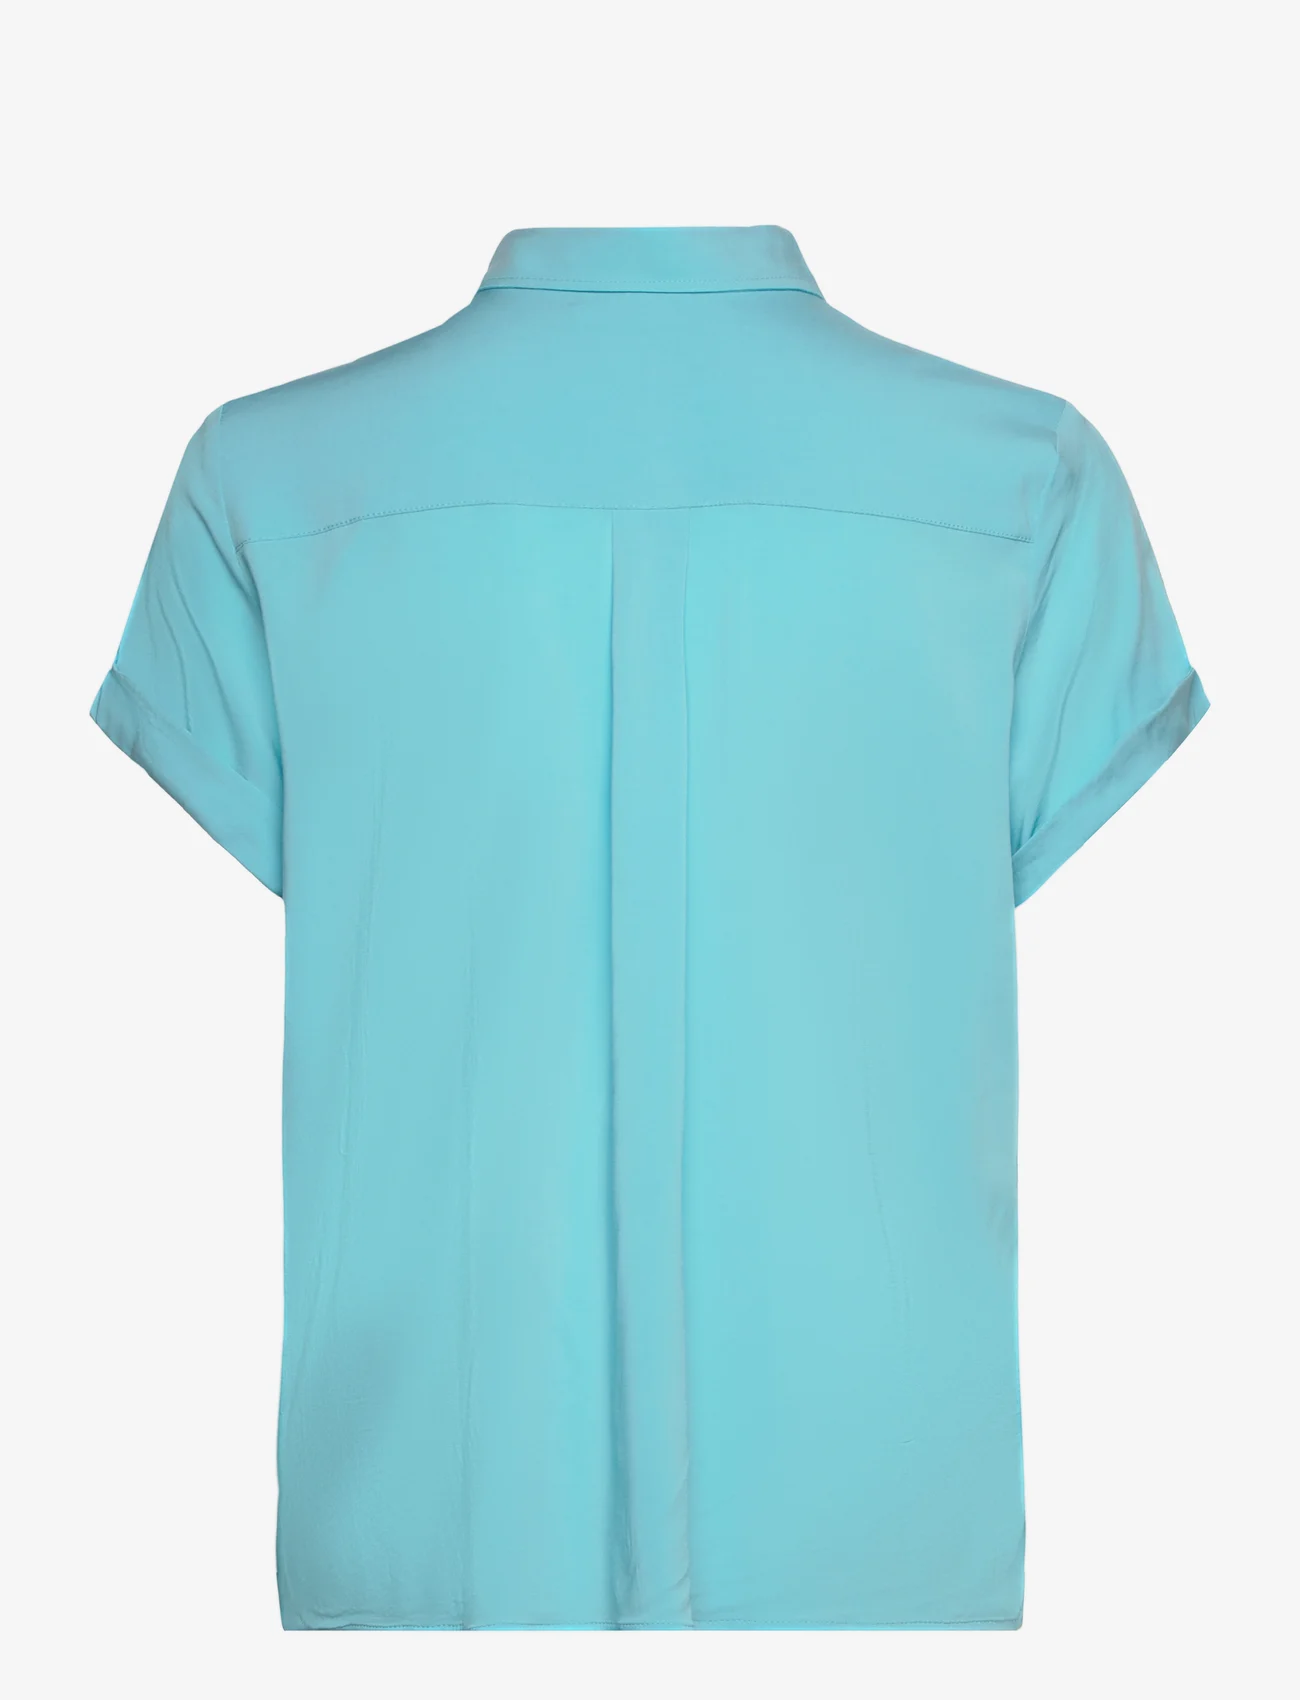 Samsøe Samsøe - Majan ss shirt 9942 - kurzärmlige hemden - blue topaz - 1